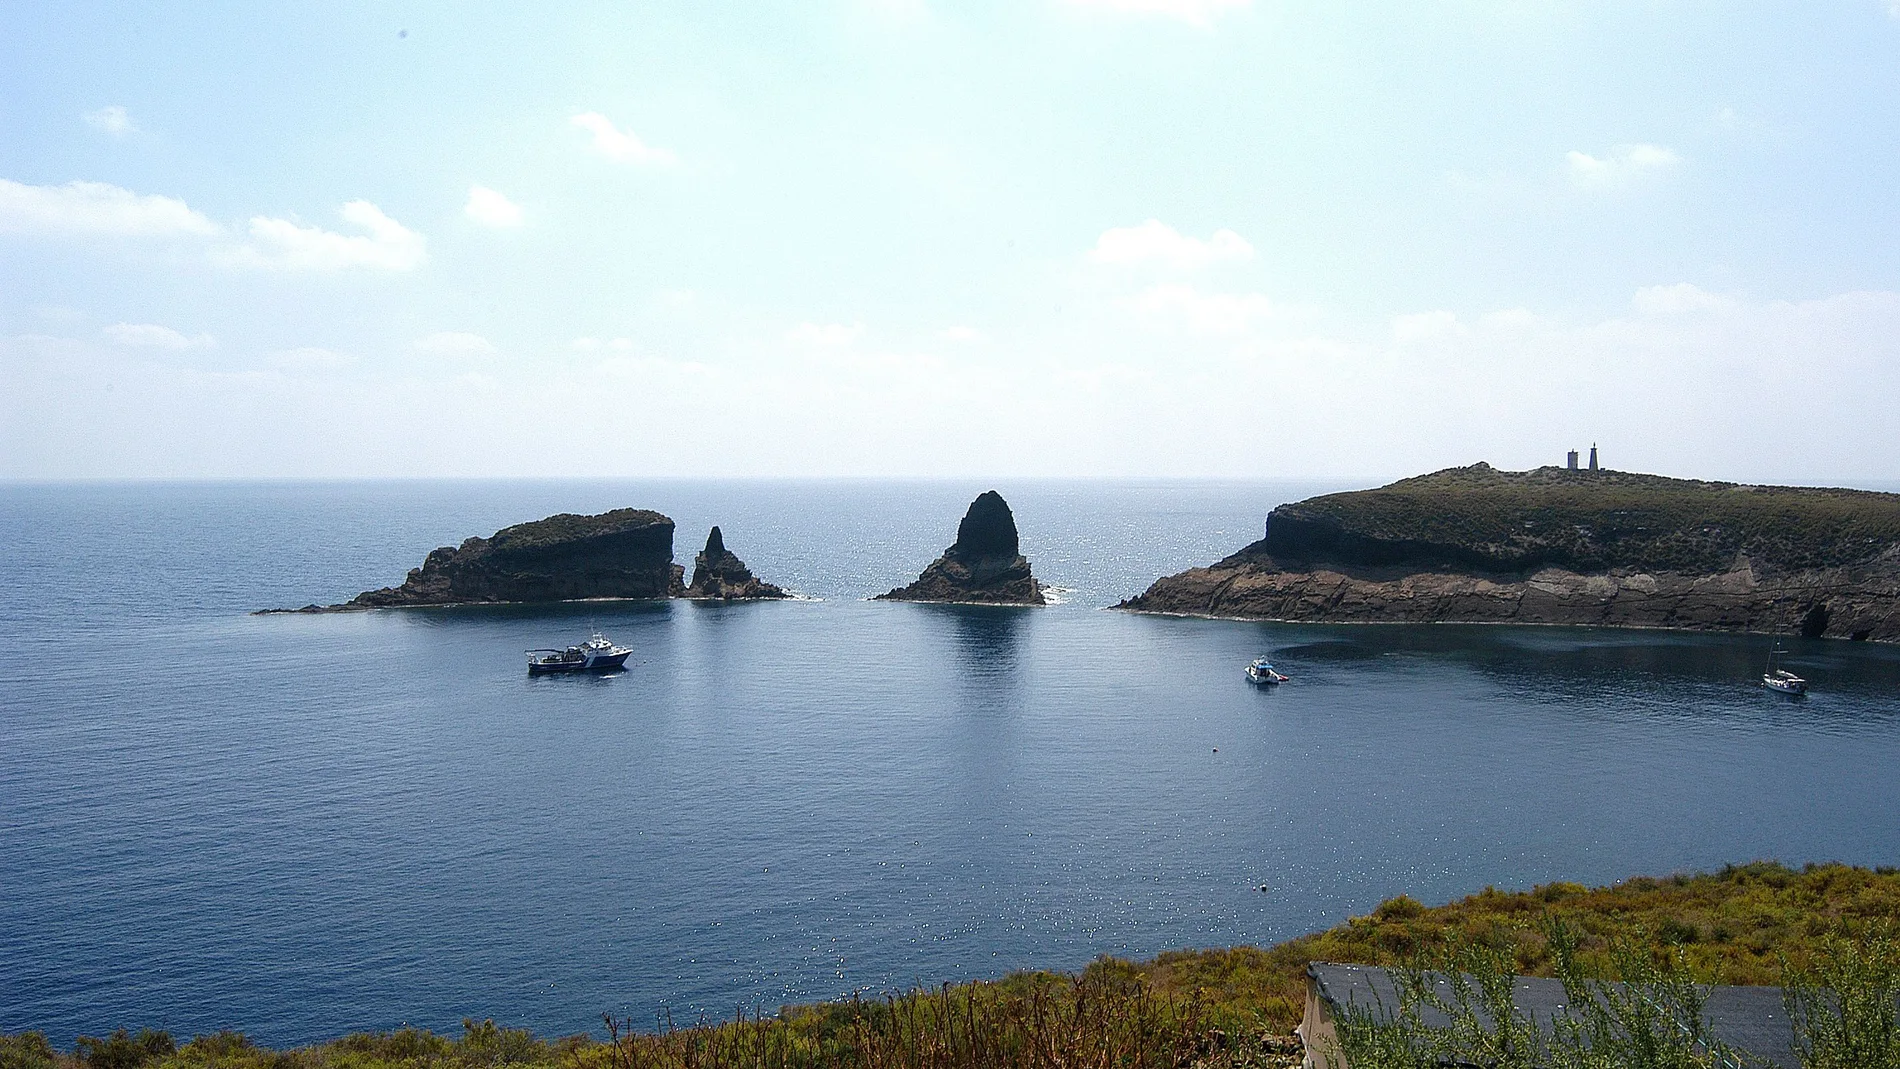 Vista de las islas Columbretes, situadas a 50 kilómetros de la costa de Castellón